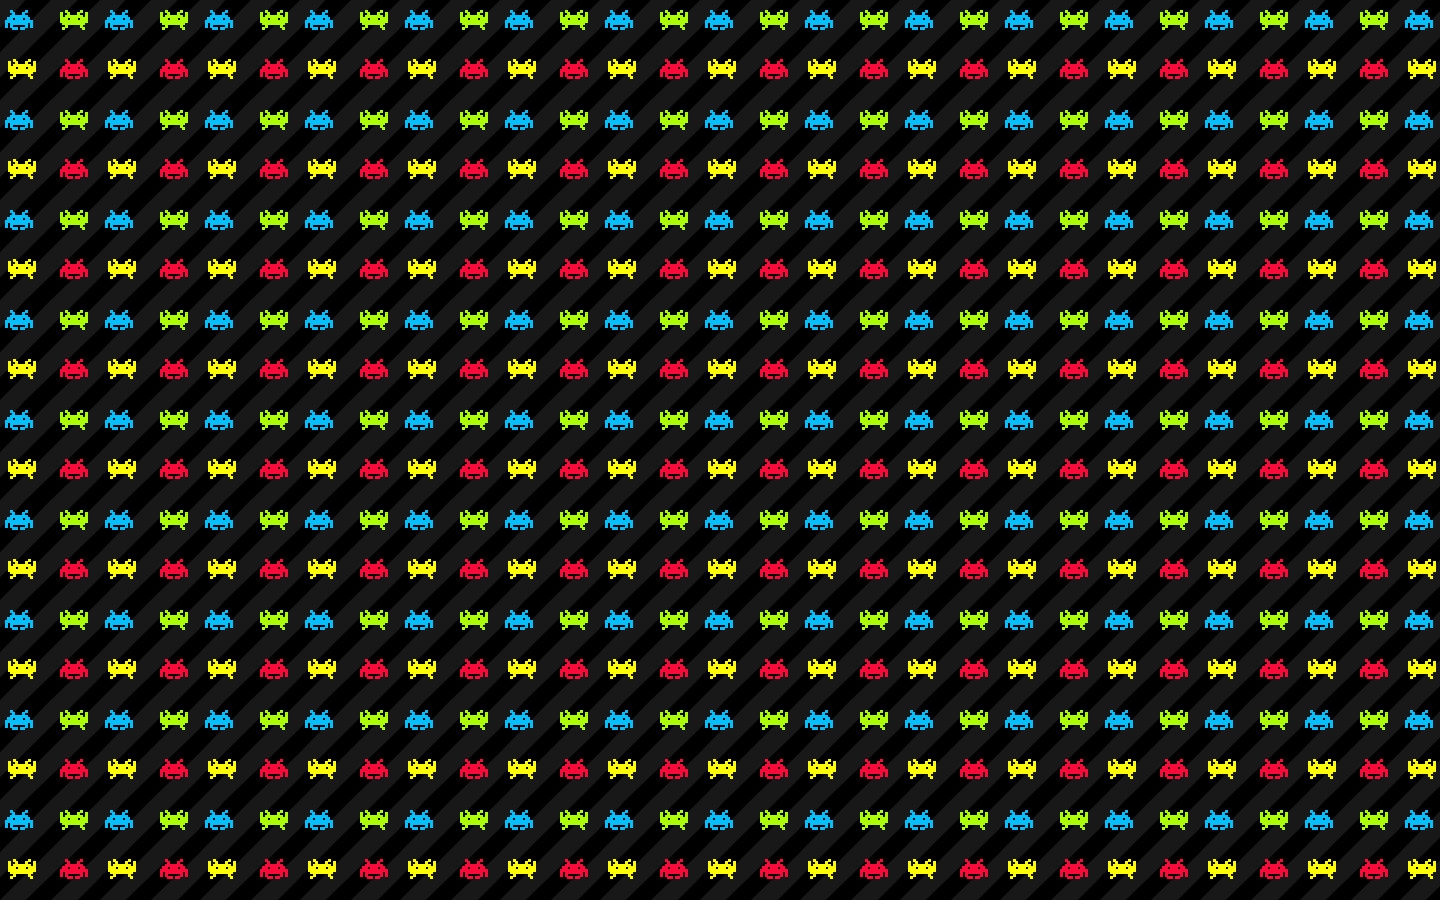 Space Invaders Wallpaper Mb Culut GamesHD